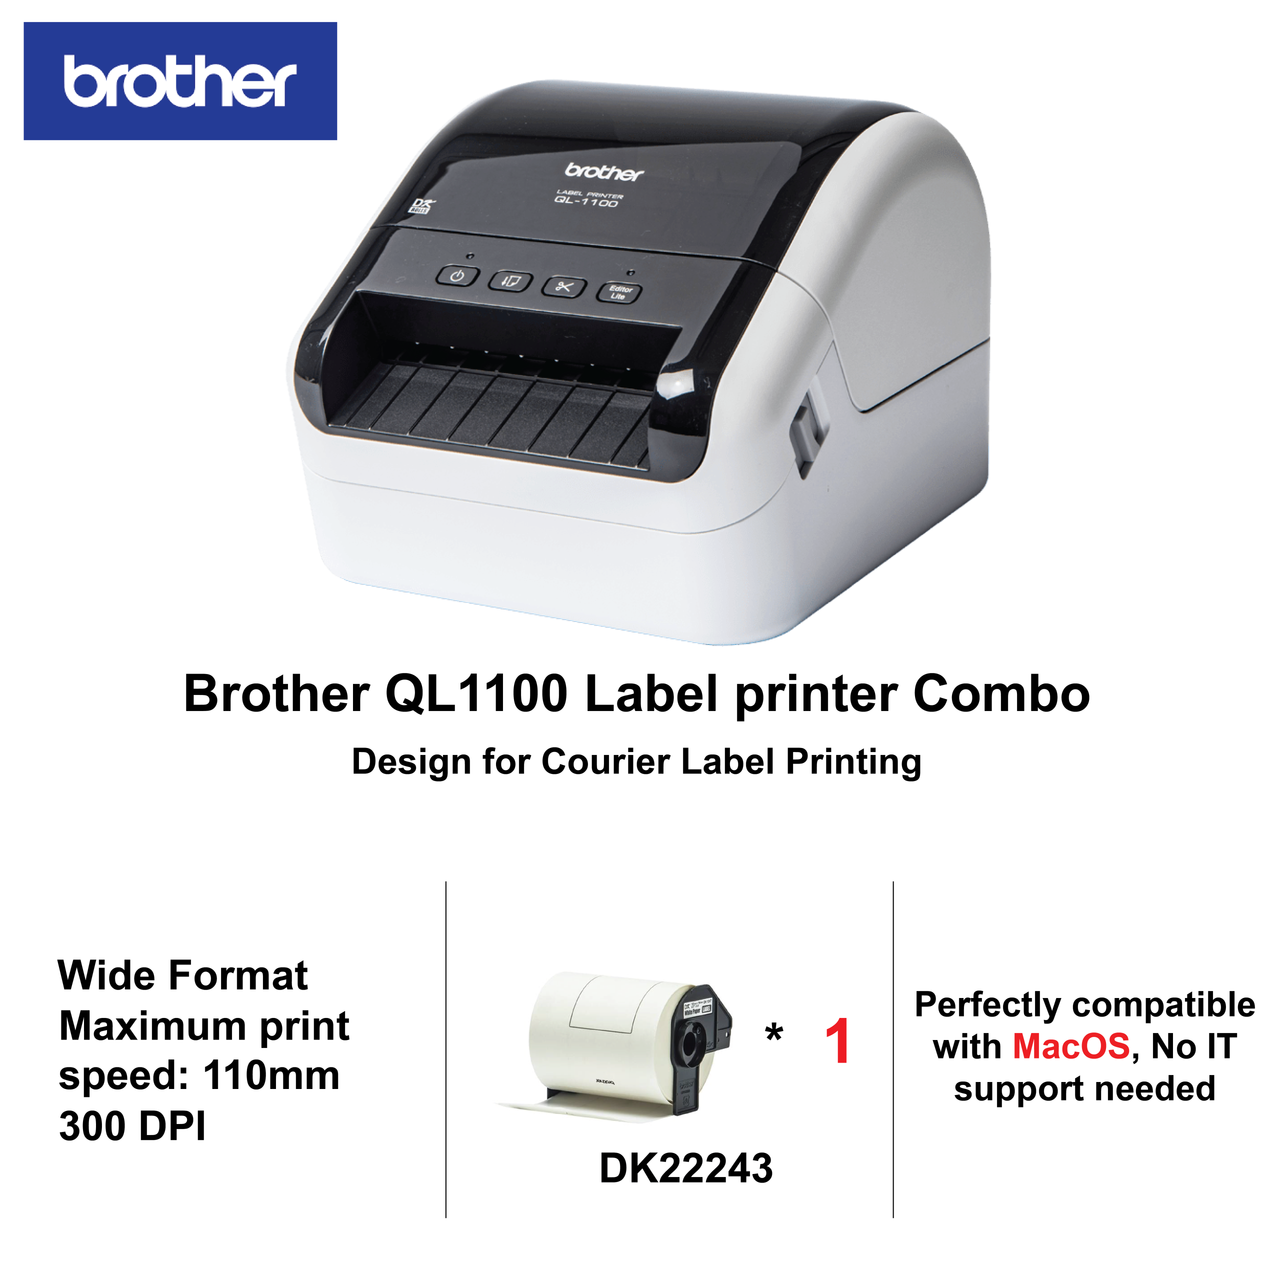 Brother QL1110NWB  Wide Format, Professional Label Printer